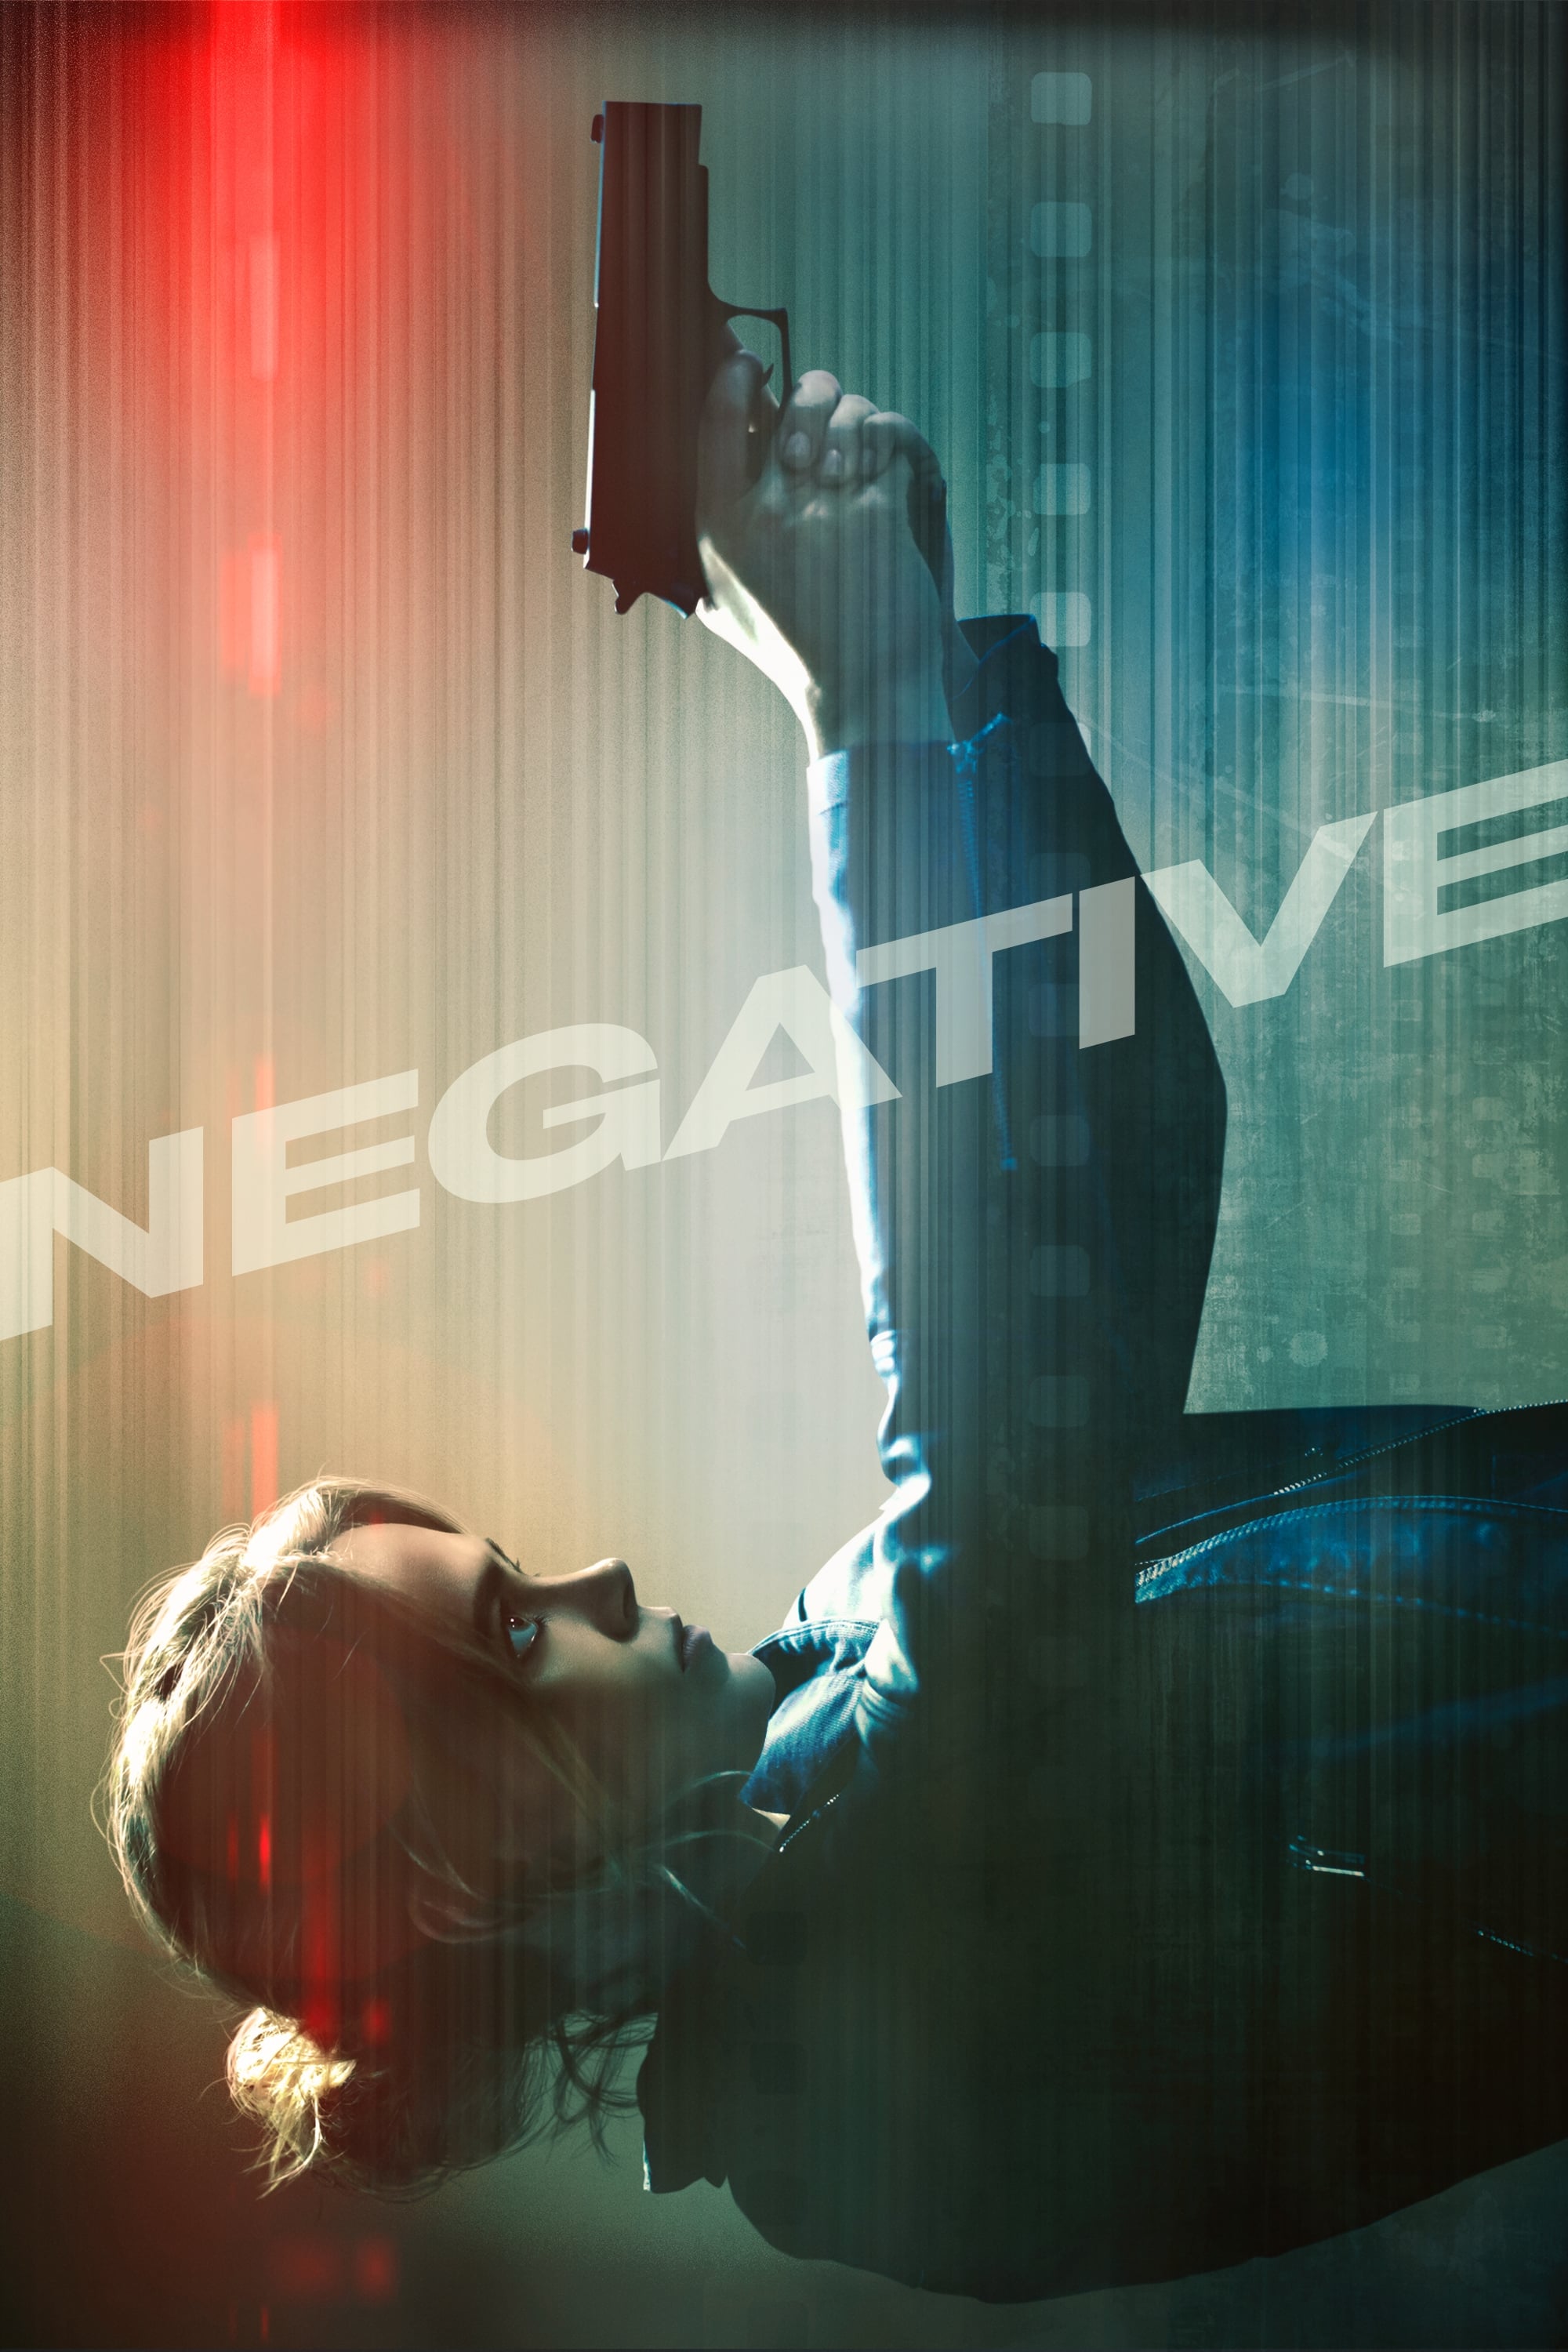 Negative